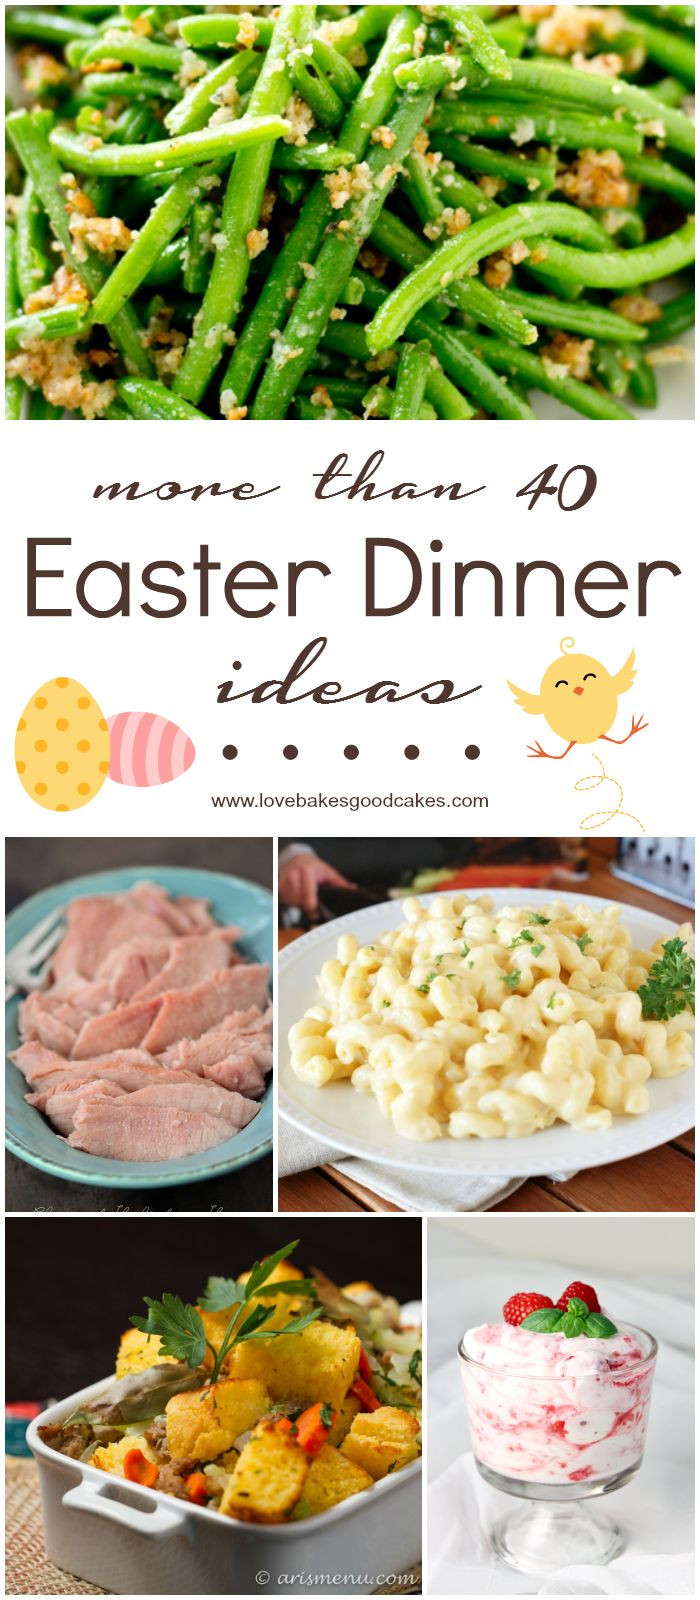 Healthy Easter Dinner Menu
 Best 25 Easter dinner menu ideas ideas on Pinterest